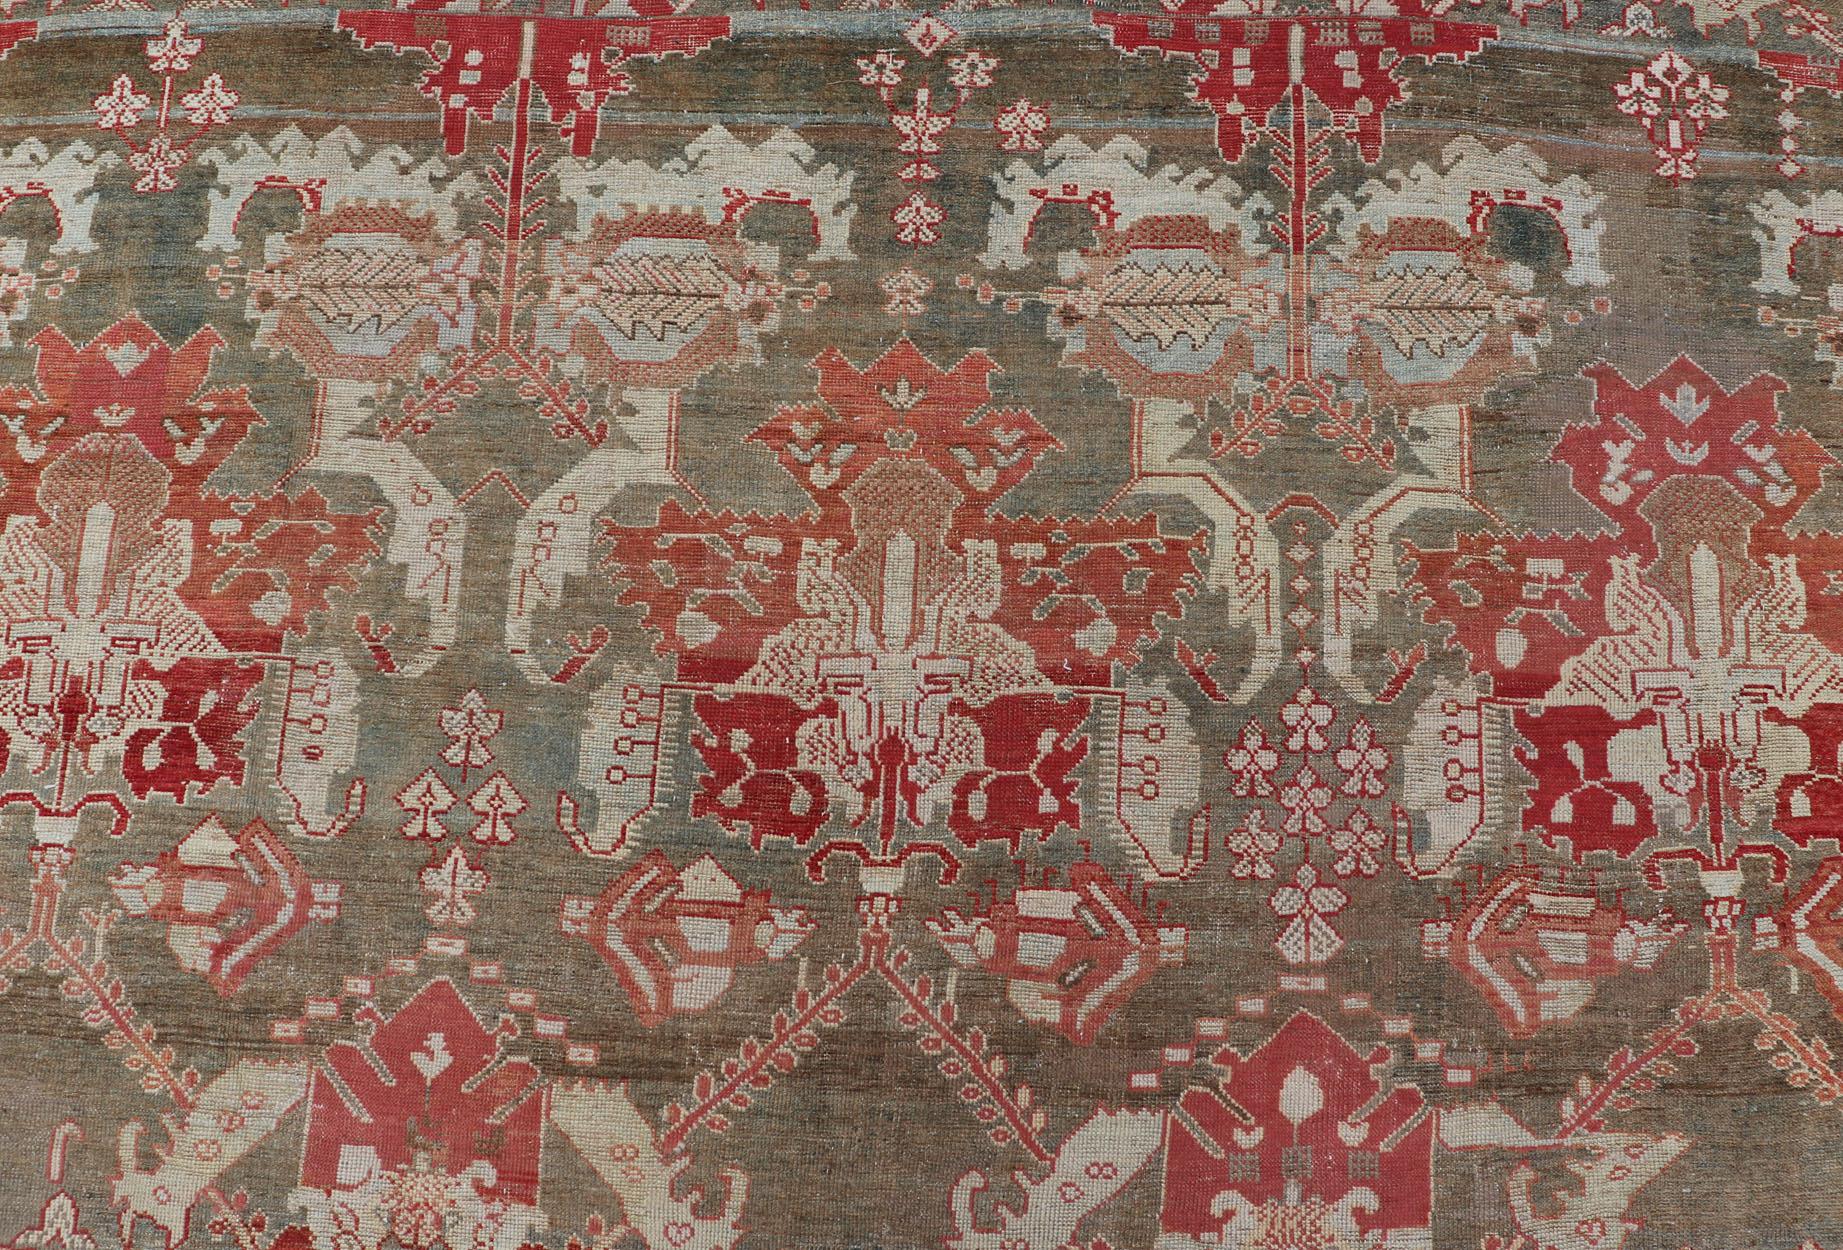 Antique Persian Large Scale Tribal Design Bakhtiari Rug in Multi Colors For Sale 8